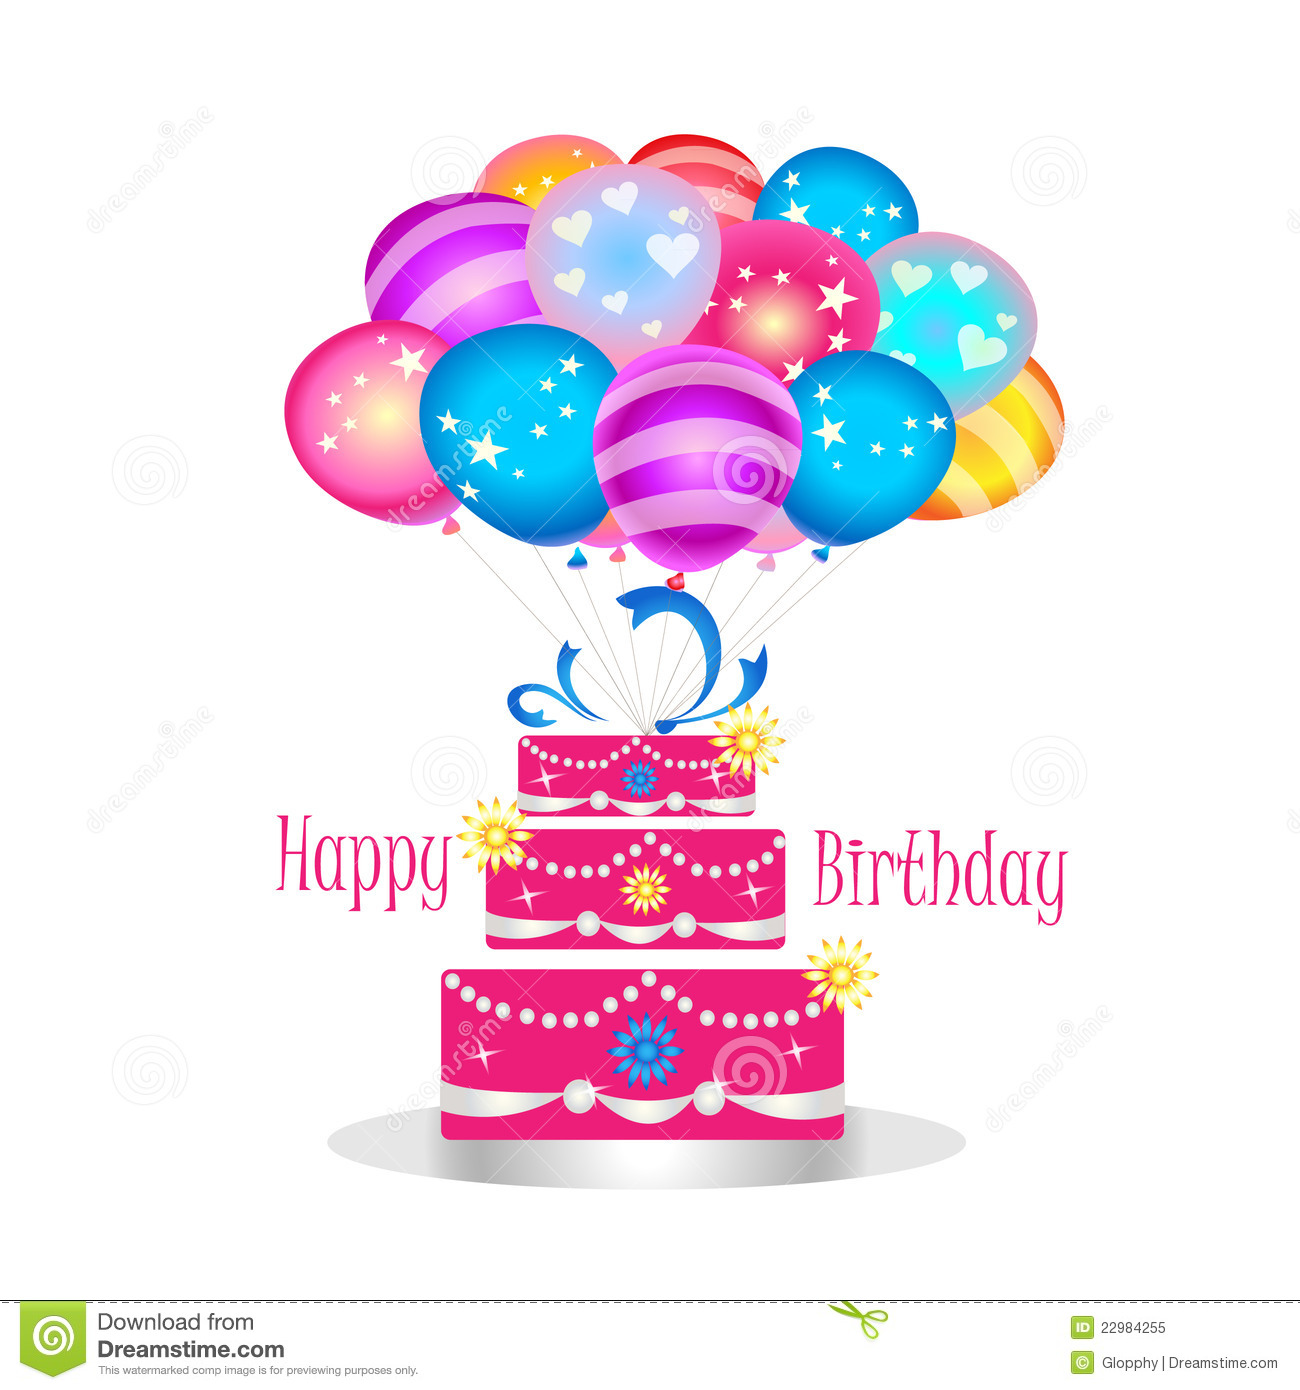 Happy Birthday Girly Cake Royalty Free Stock Photo   Image  22984255